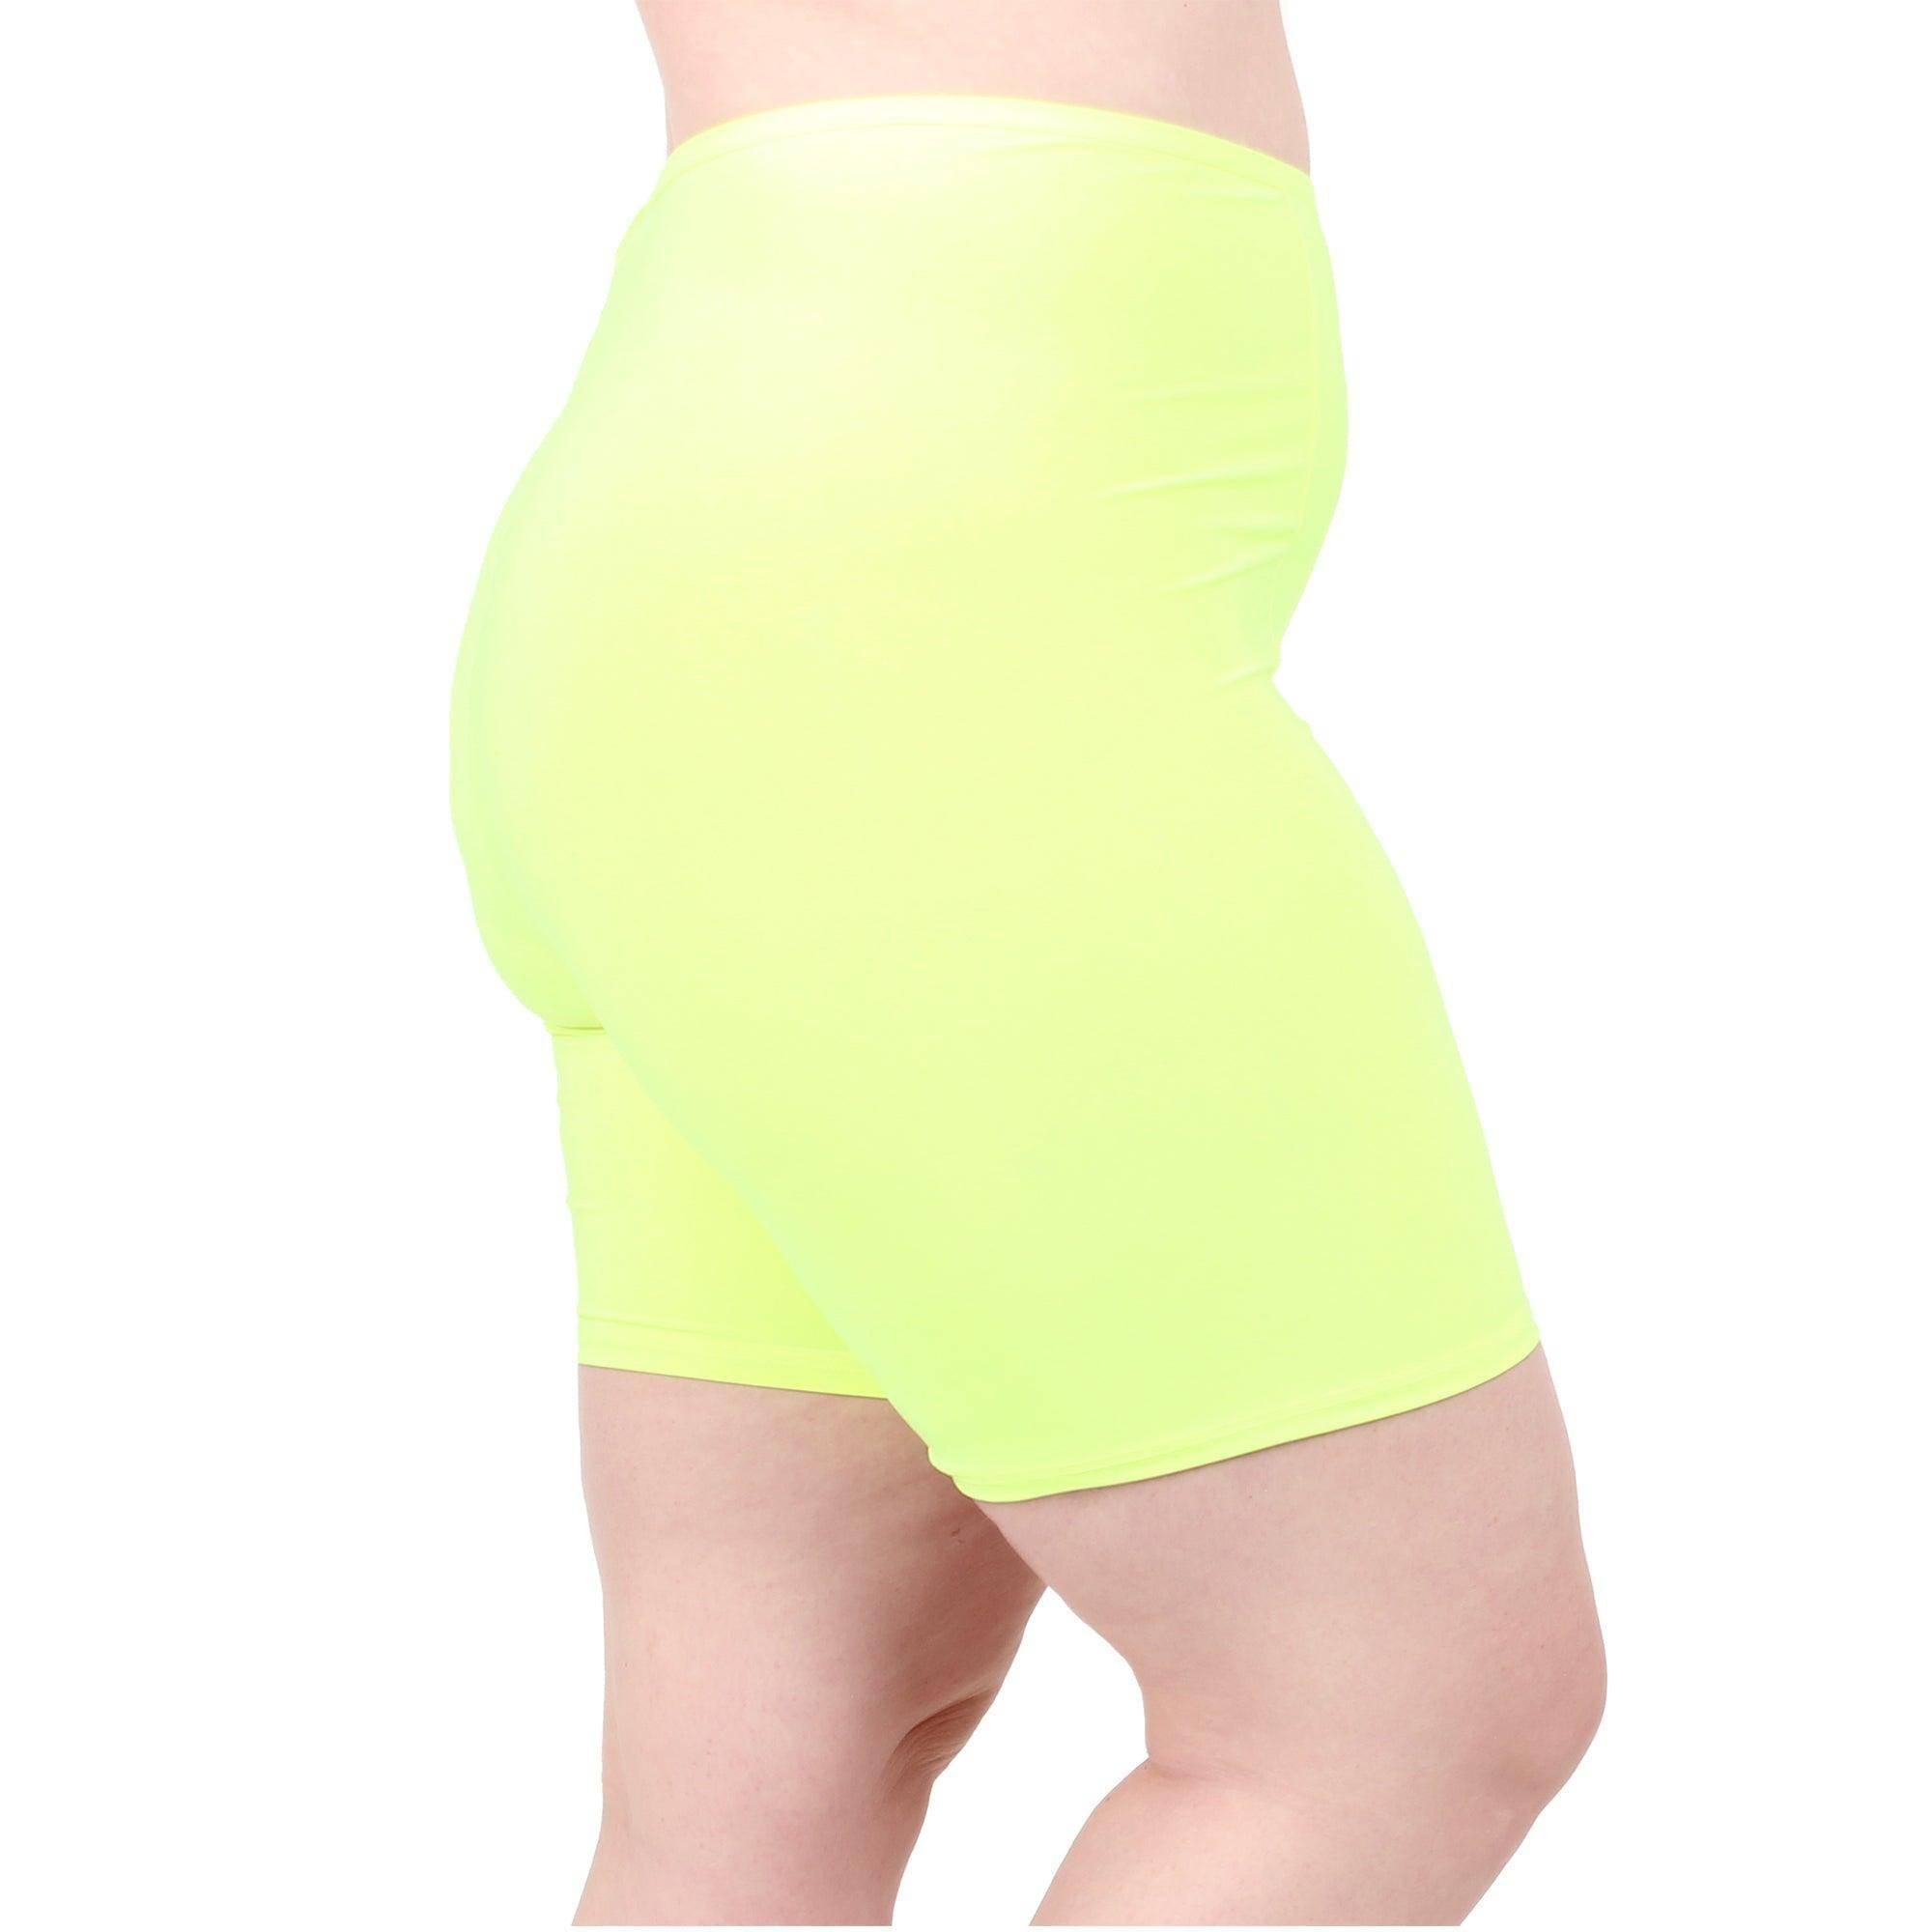 Buy Anti Chafing Shorts Women High Waist Slip Shorts for Under